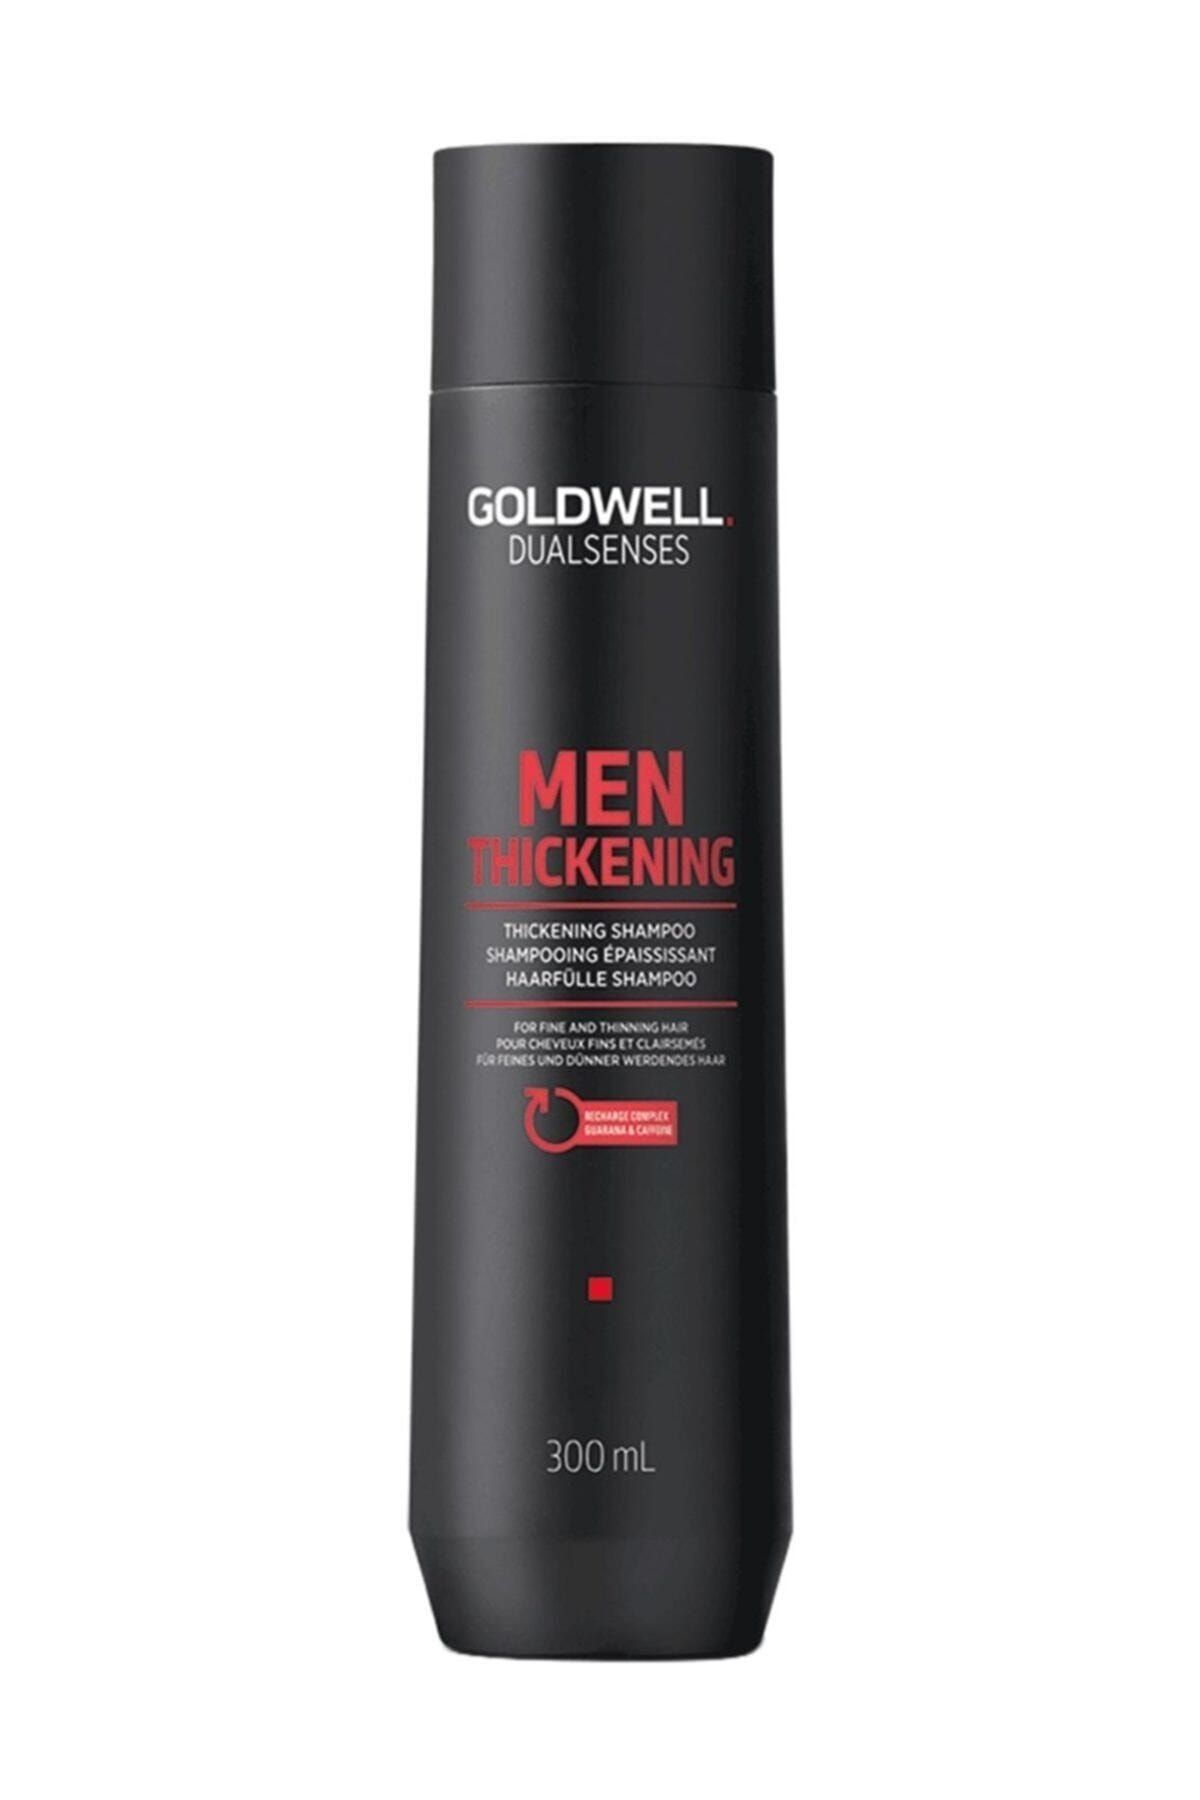 GOLDWELL Men Thickening Dökülme Karşıtı Şampuan 300ml